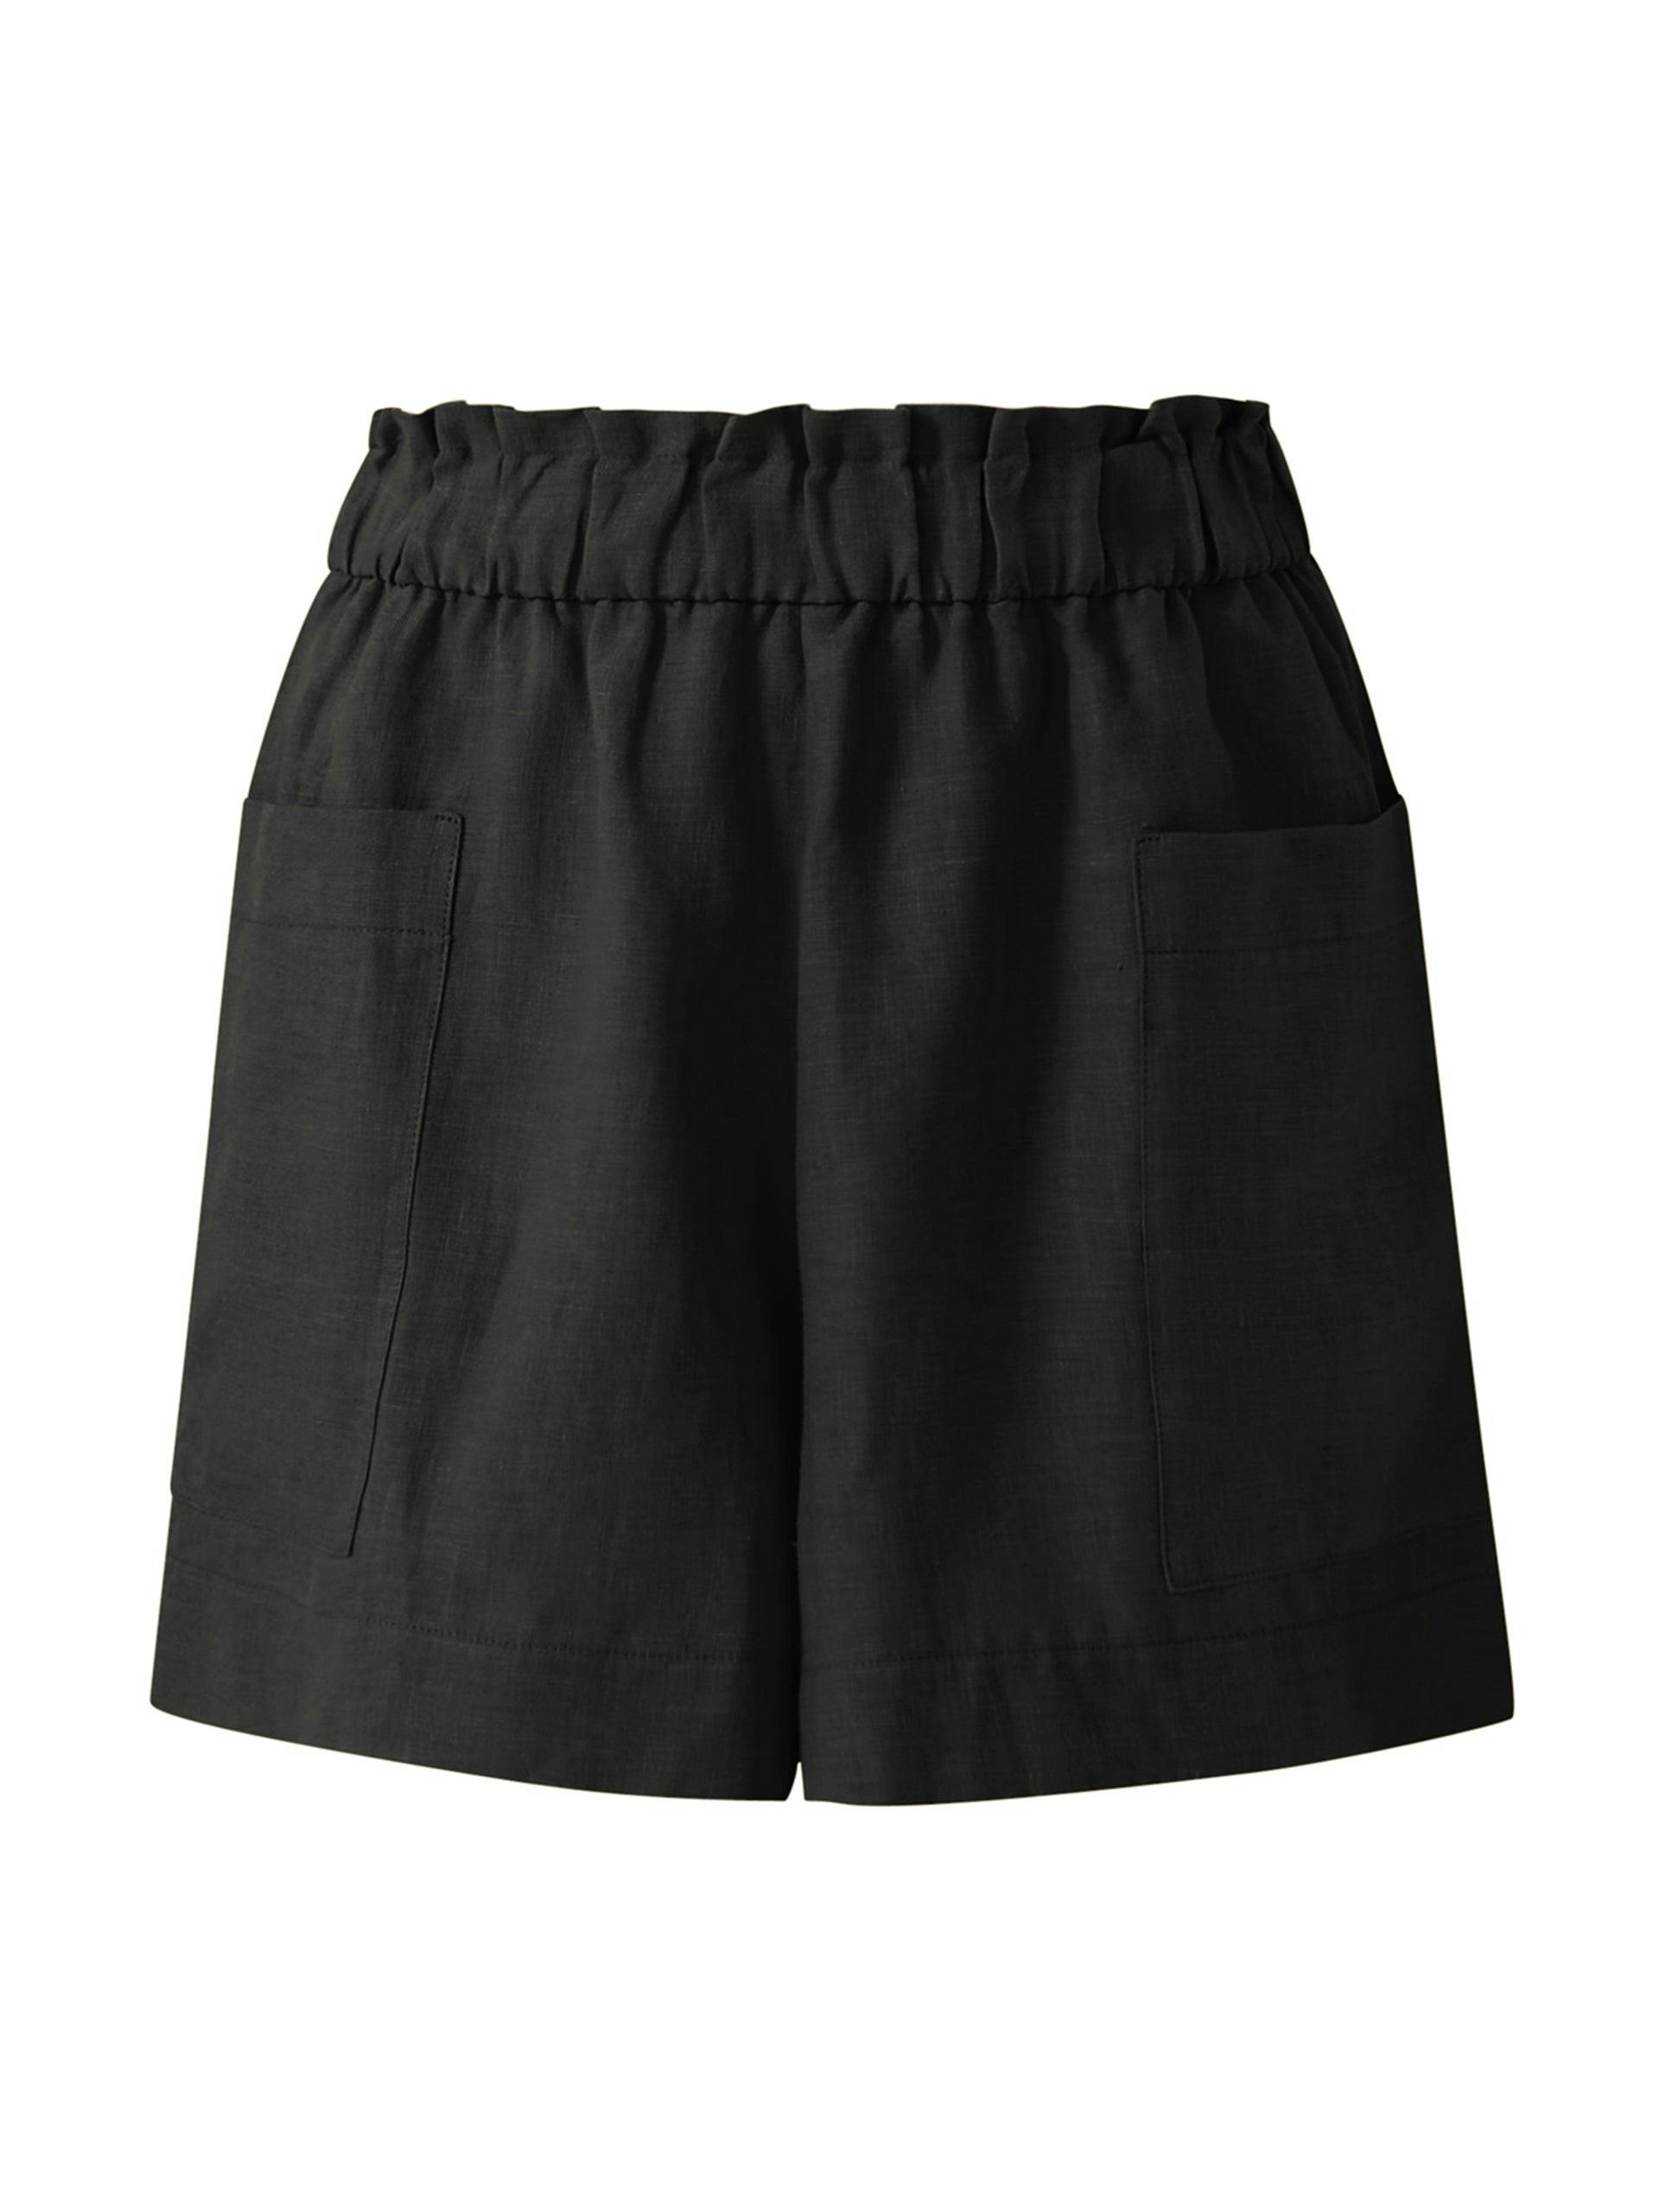 Emilia black linen shorts